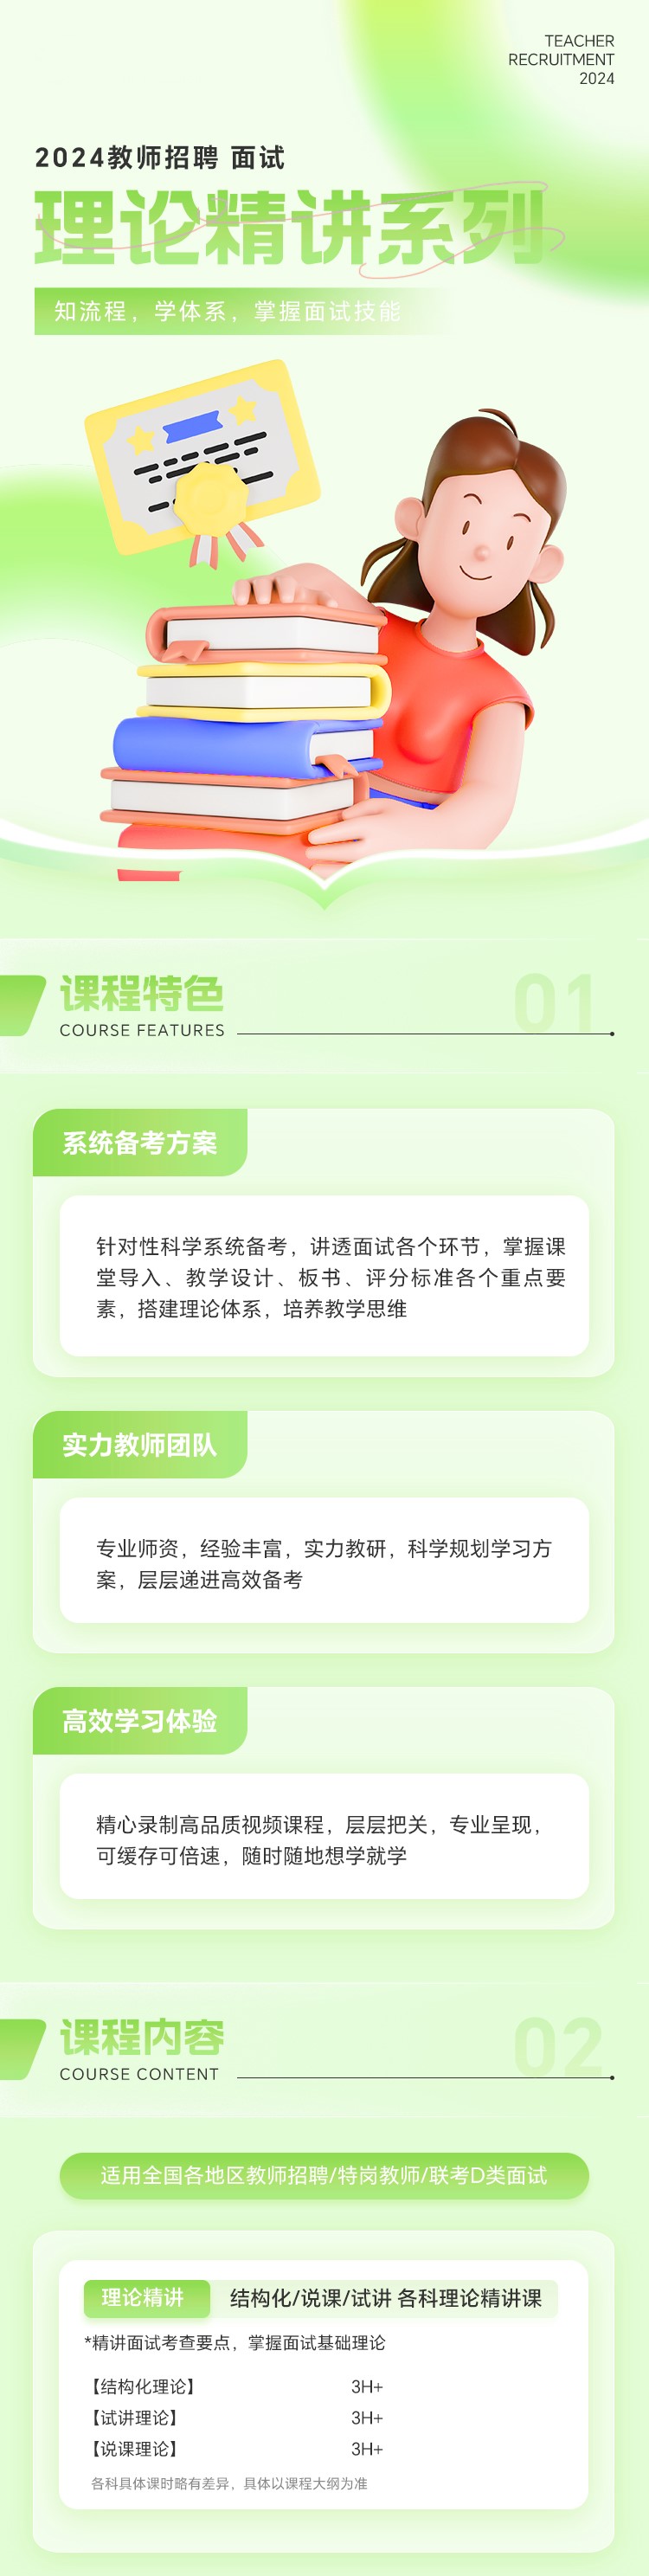 https://simg01.gaodunwangxiao.com/uploadfiles/product-center/202404/23/58abf_20240423111651.jpg